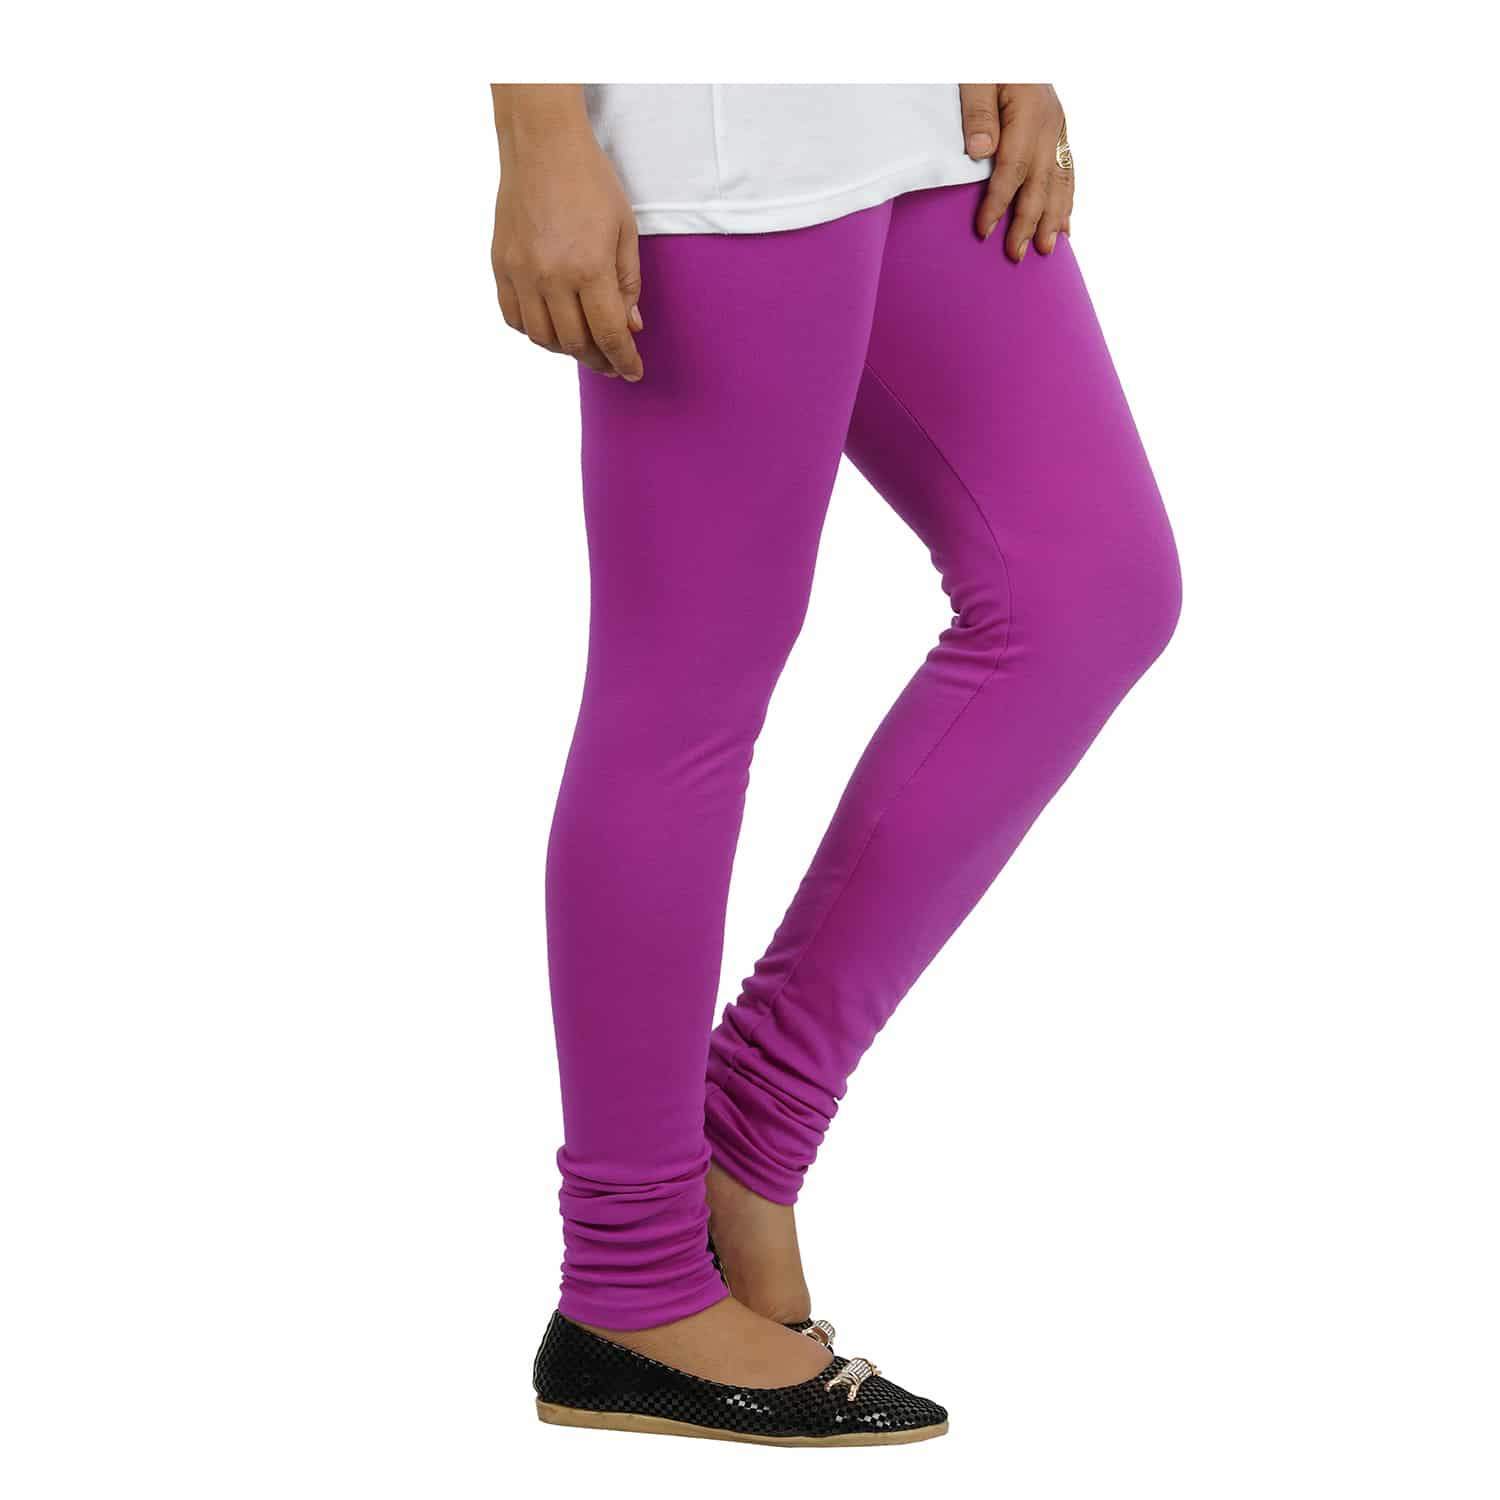 Brinjal Purple Plain Lycra Leggings - Shopindiapparels.com